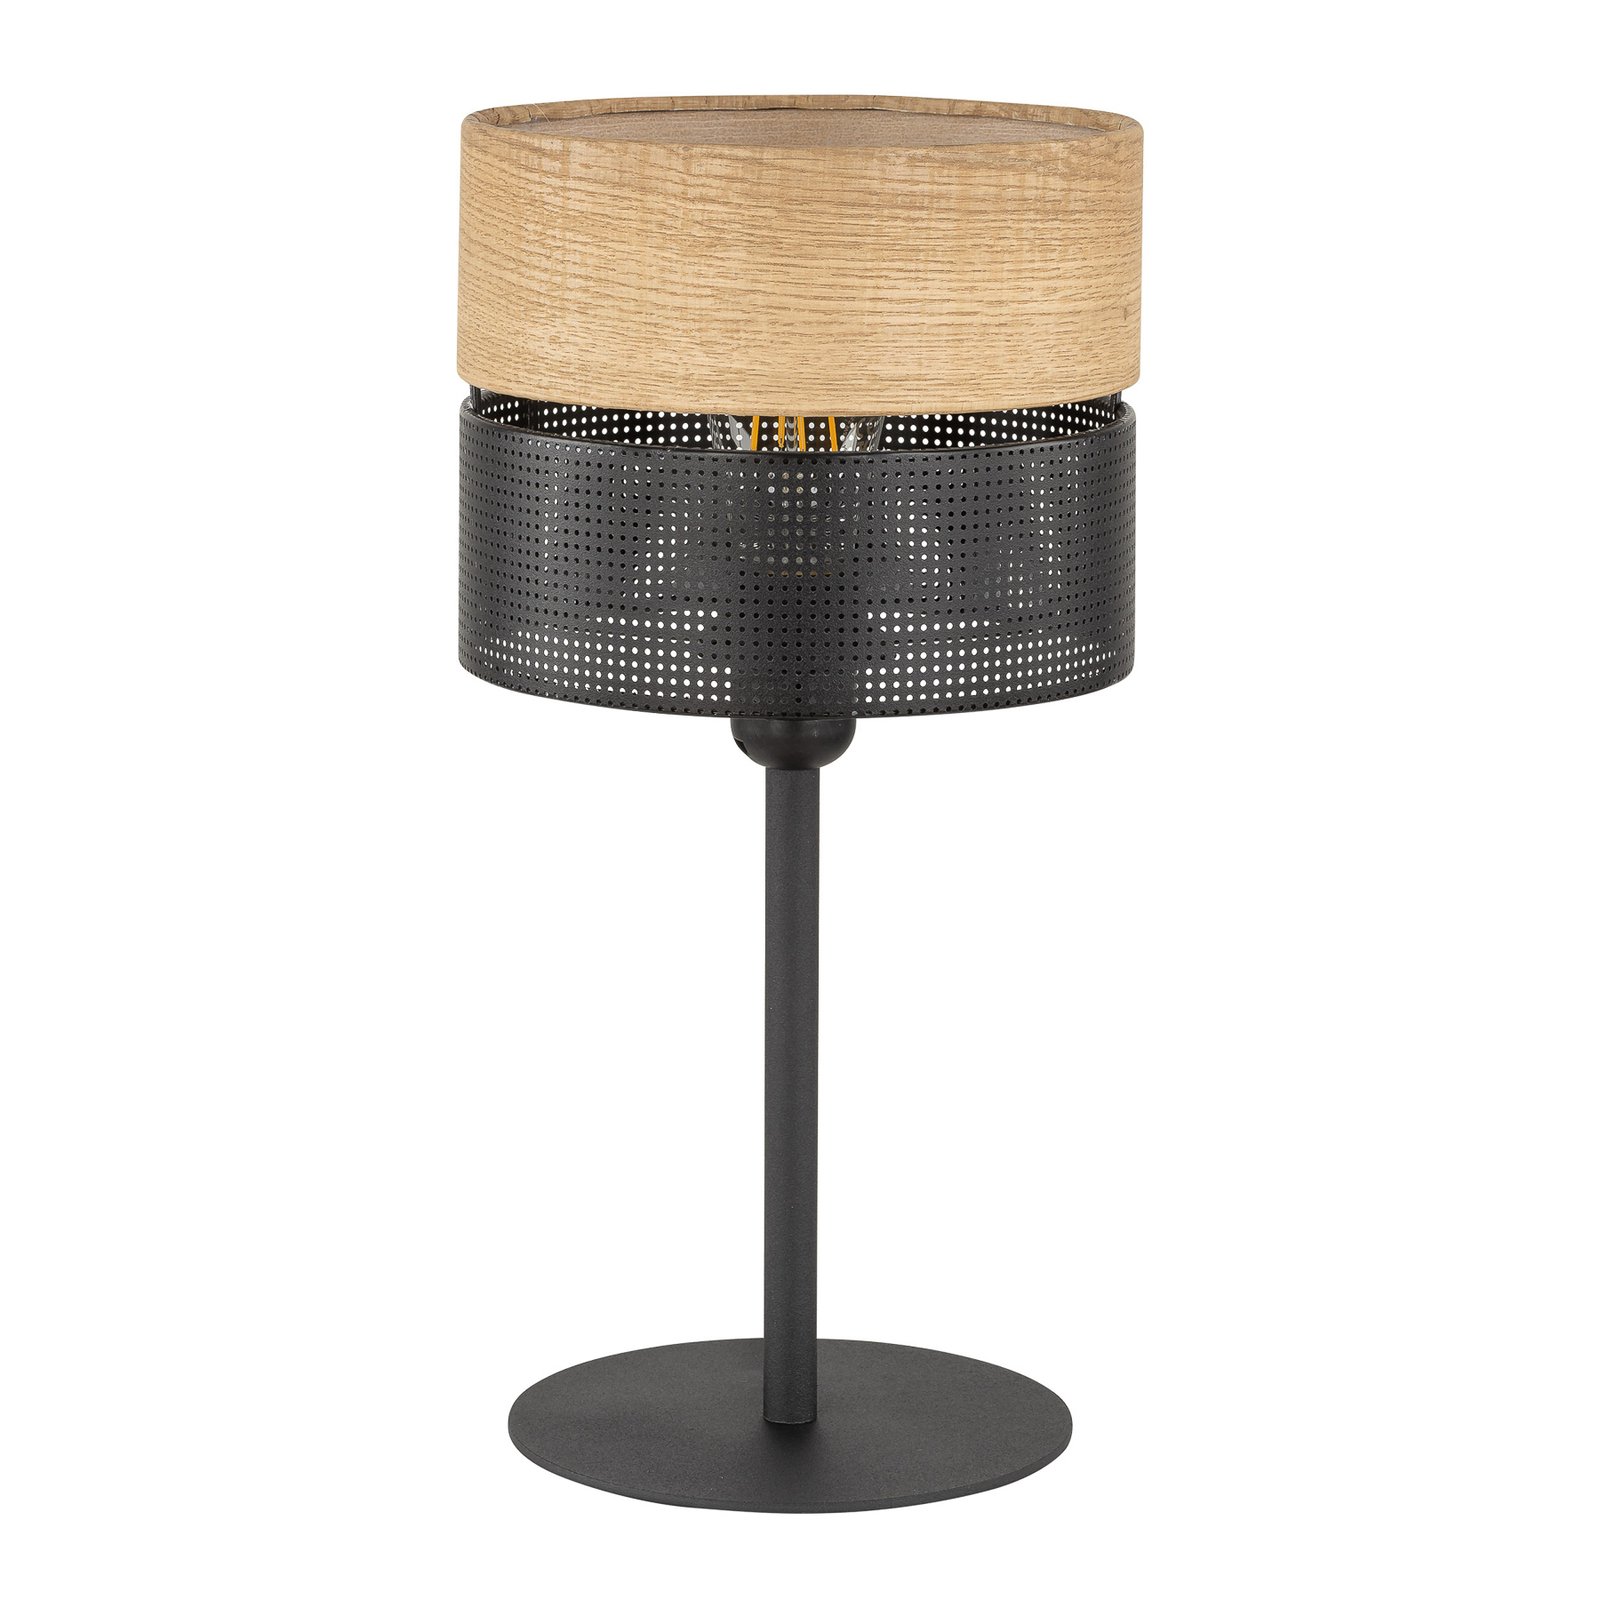 Nicol bordslampa, svart, trälook, höjd 45 cm, 1 x E27